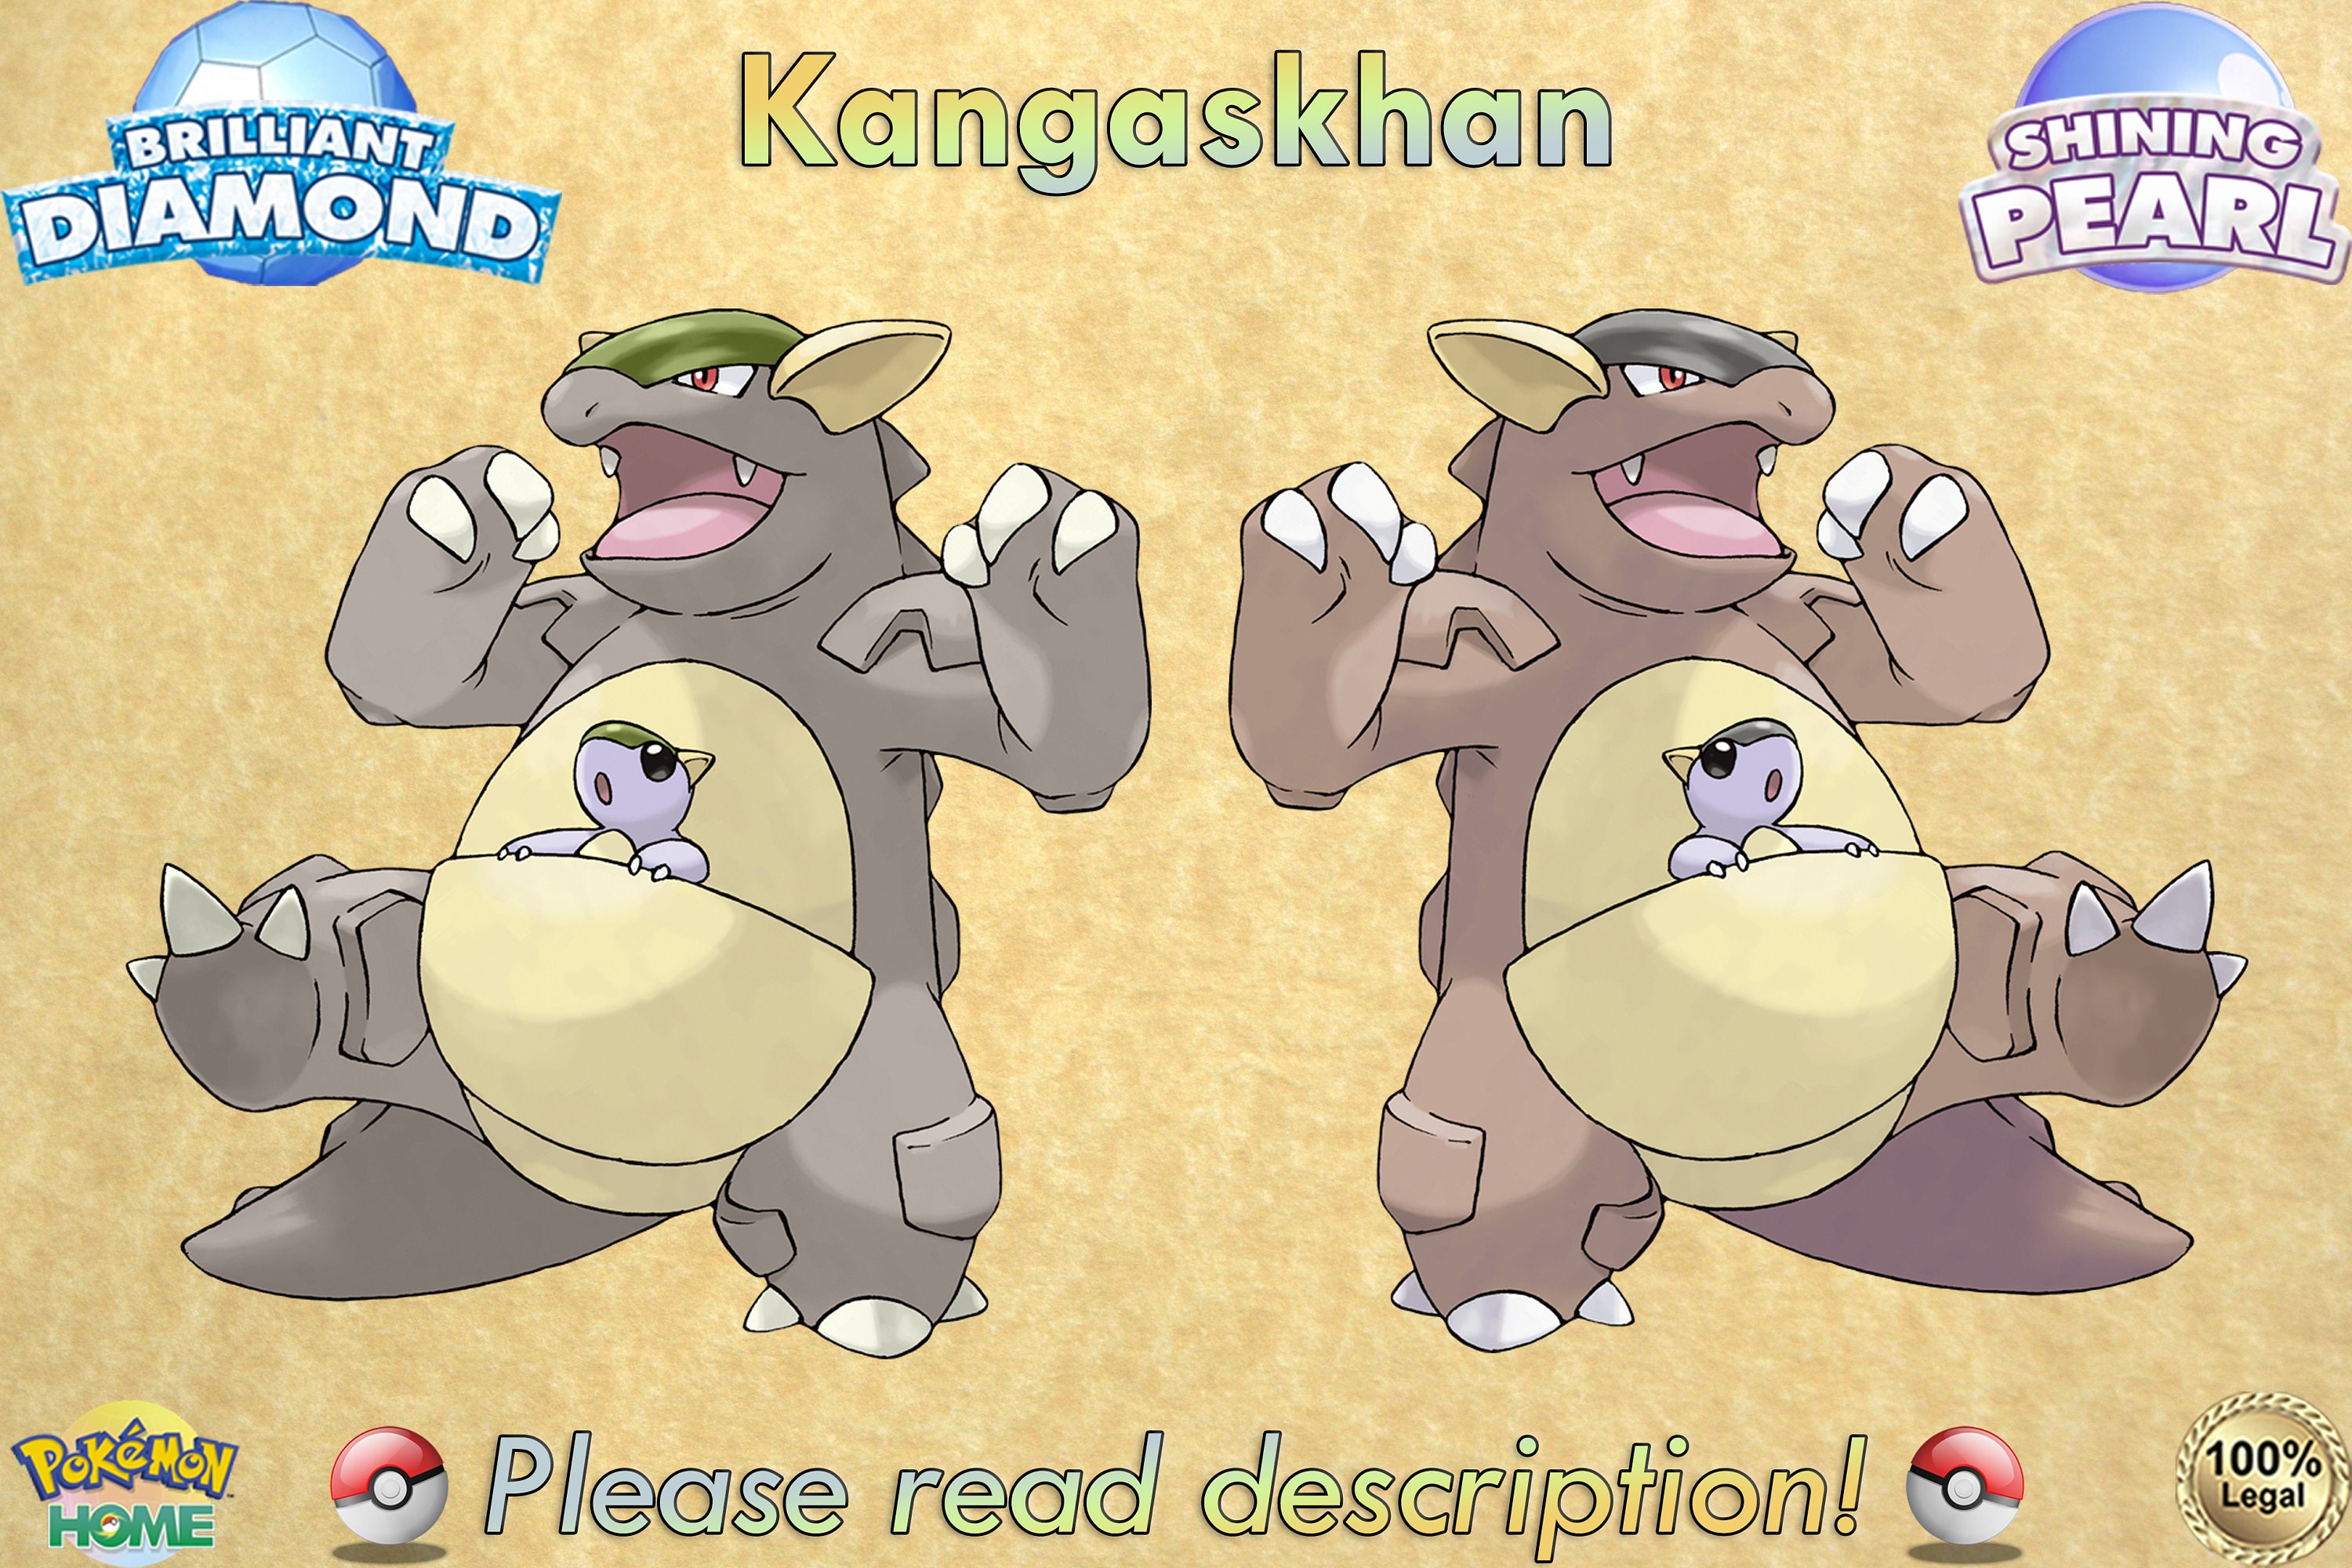 Shiny Kangaskhan / Pokemon Let's Go / 6IV Pokemon / Shiny Pokemon